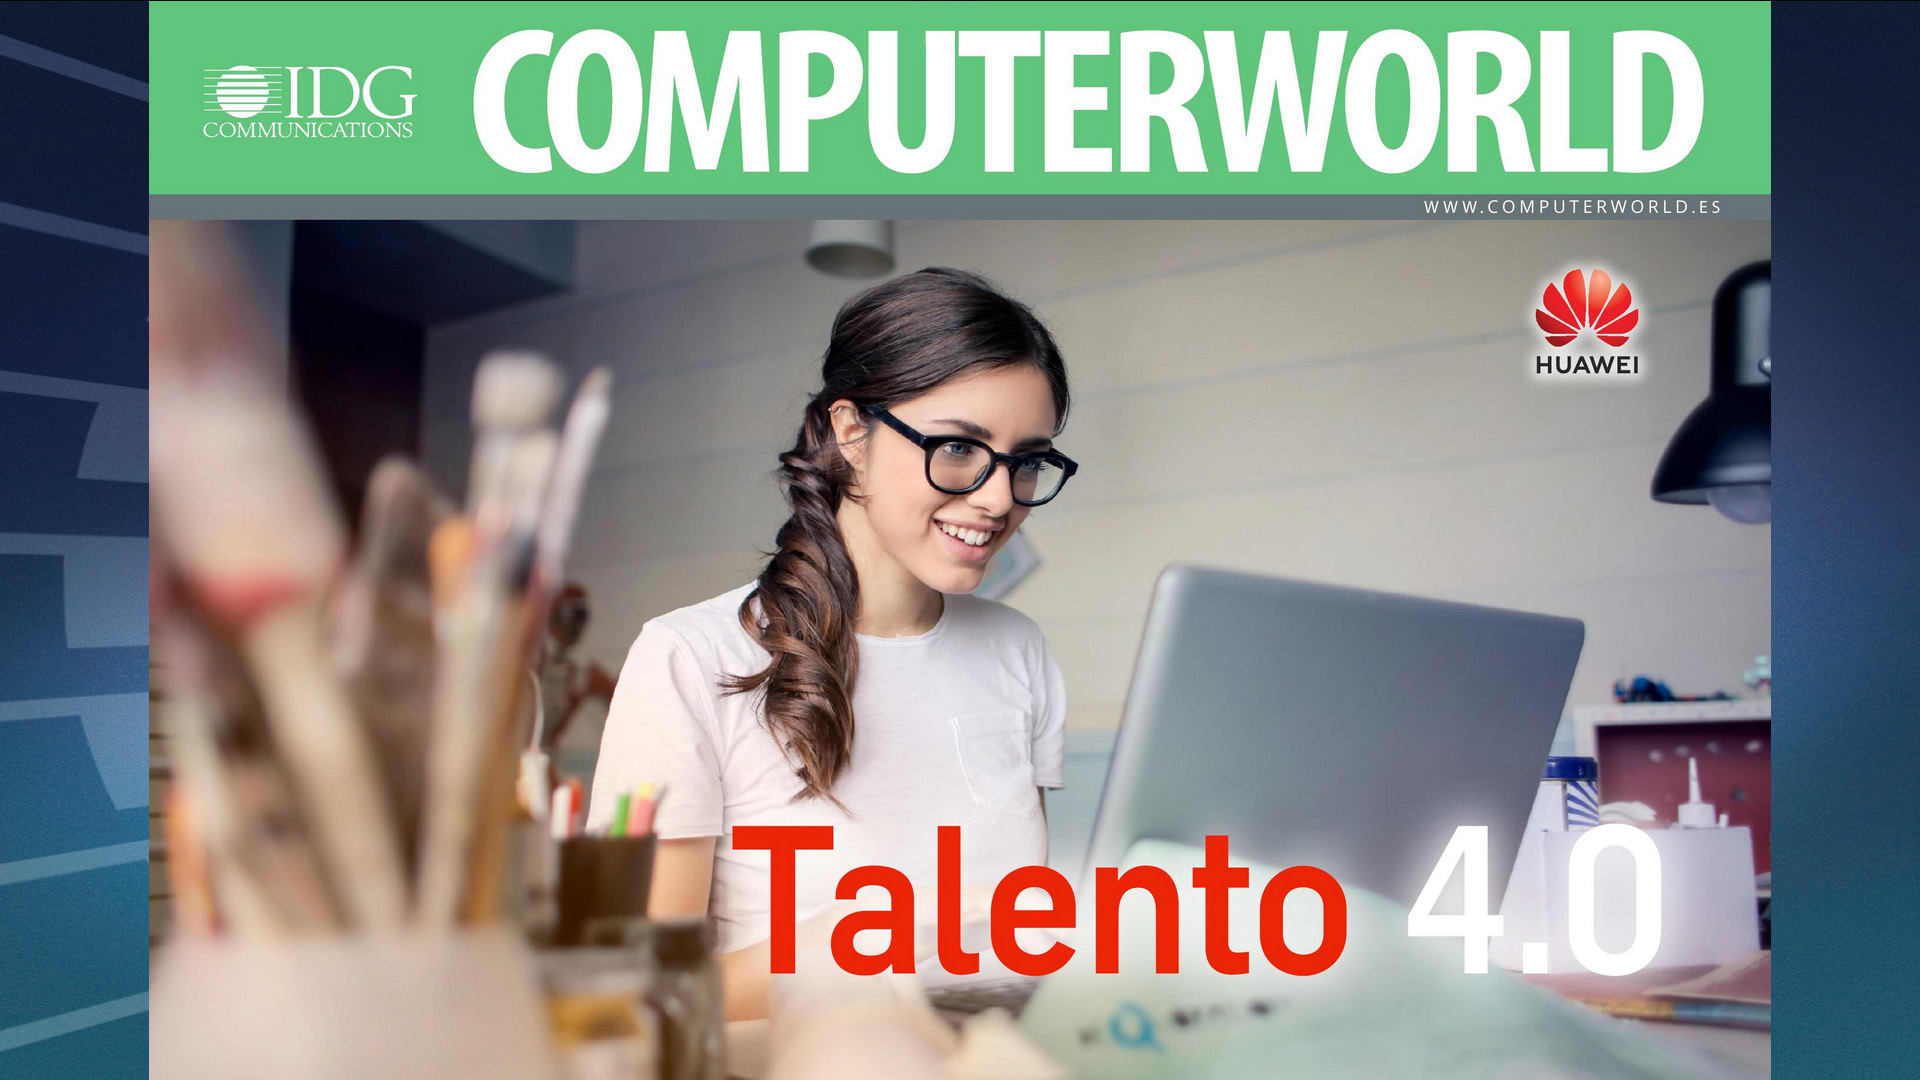 ComputerWorld Insider Talento 4.0